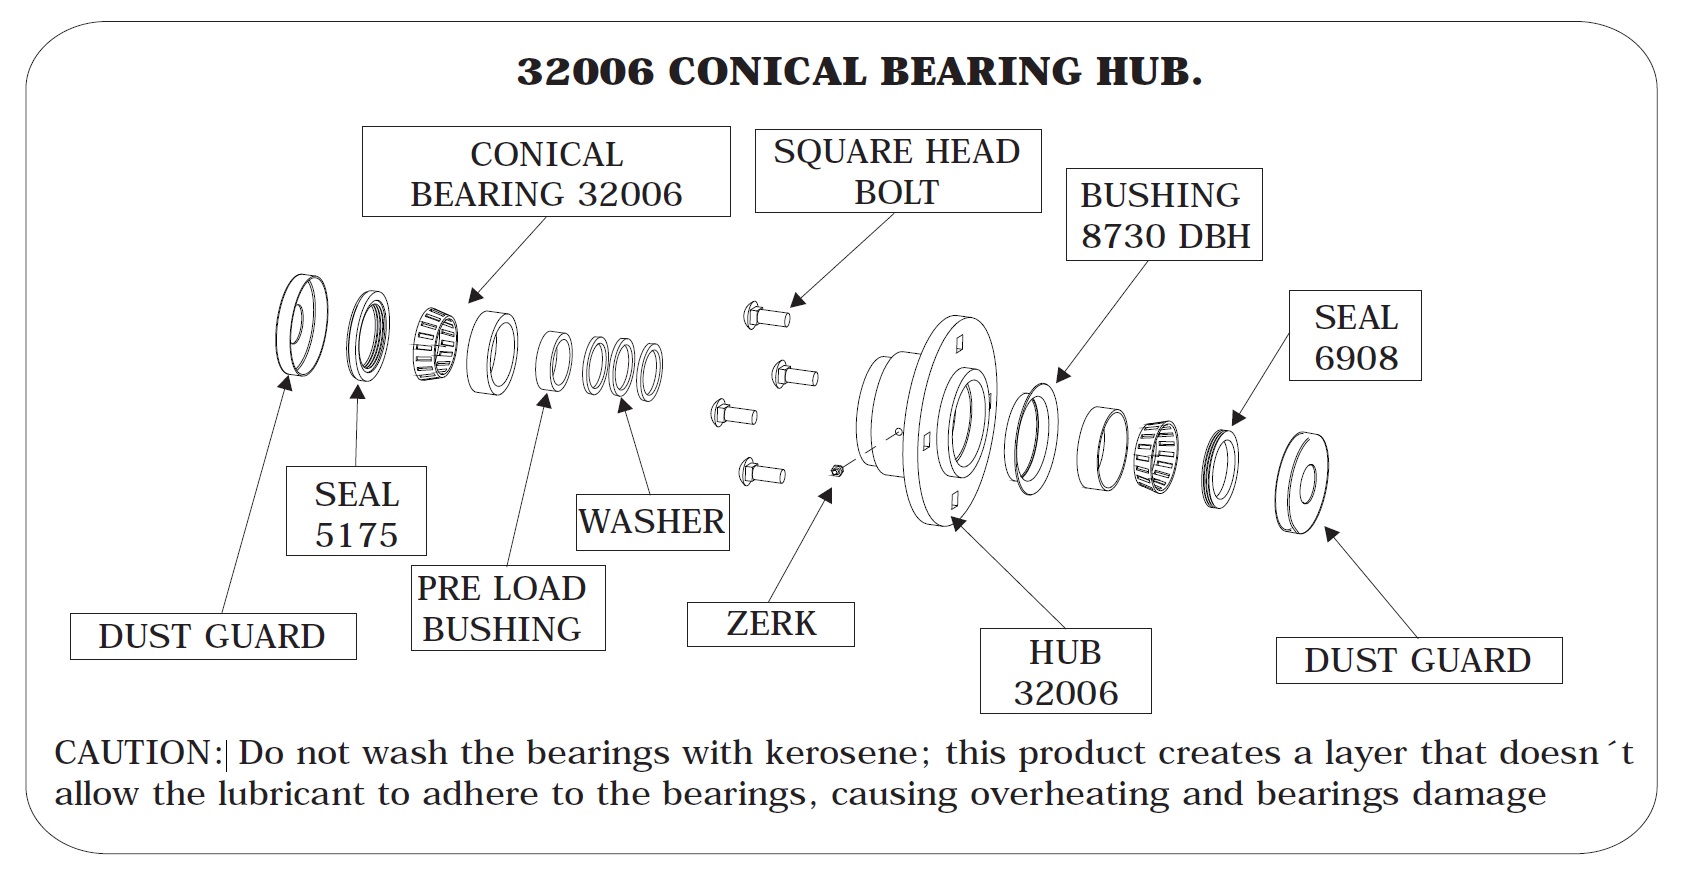 Fig. 32006 CONICAL BEARING HUB.